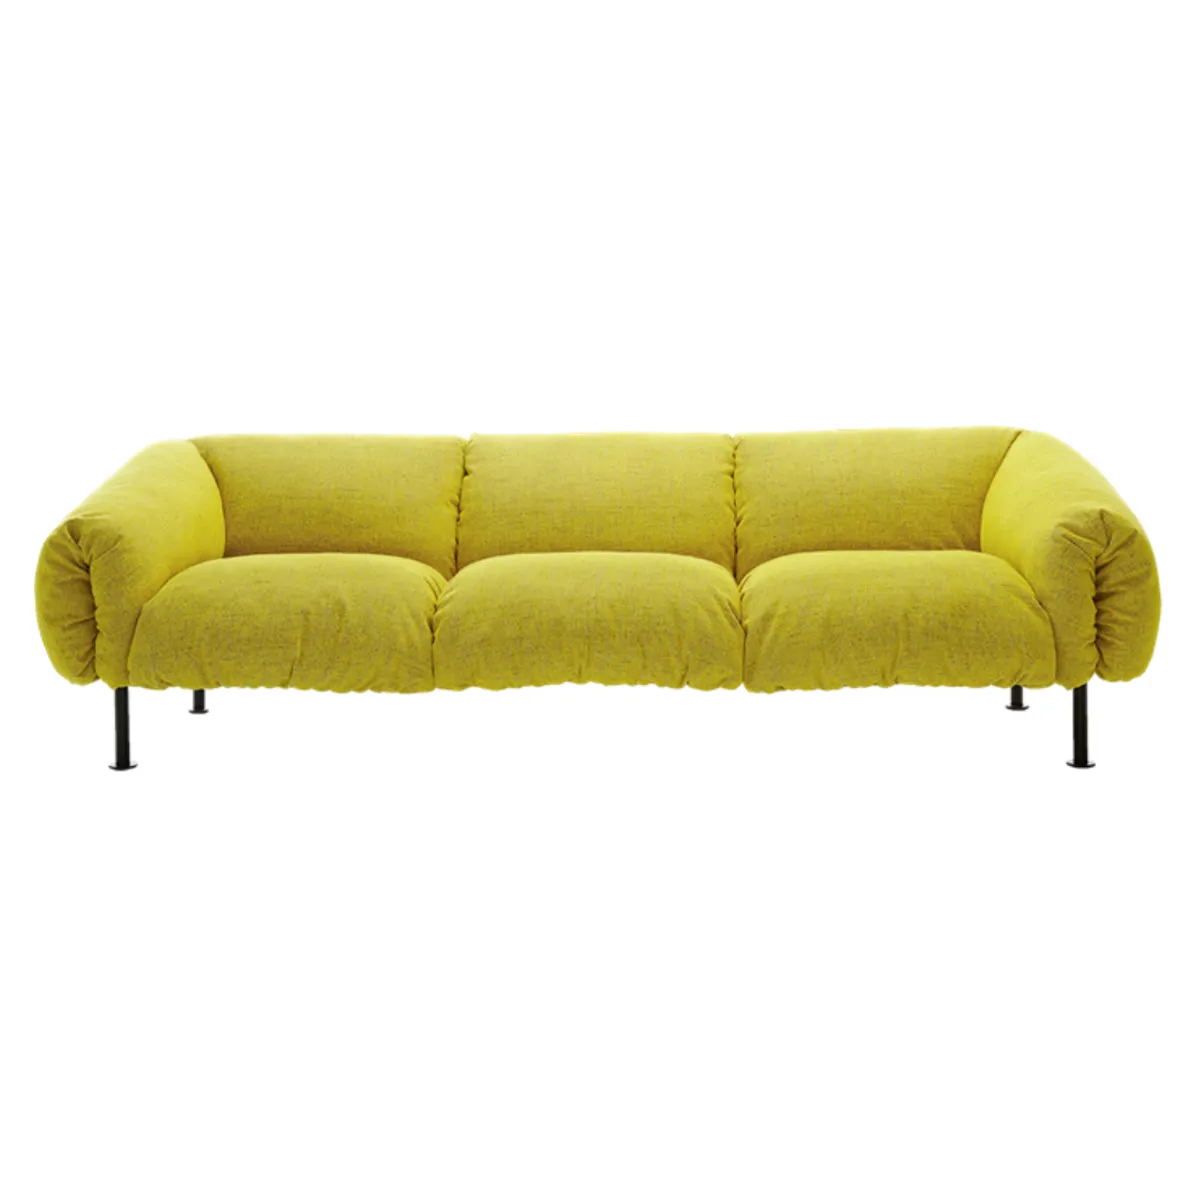 Albion sofa 1